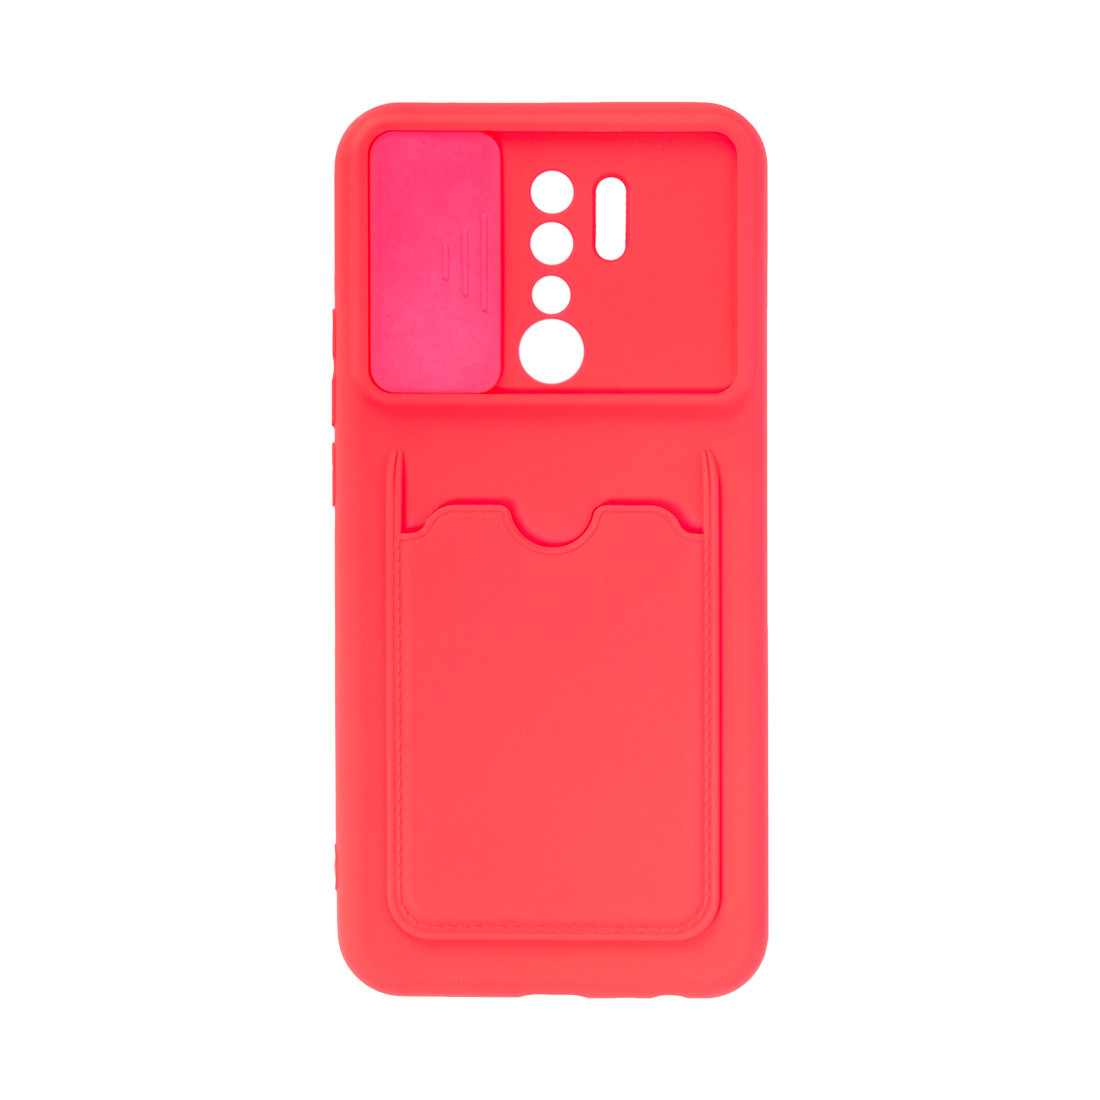 Чехол для телефона X-Game XG-S0321 для Redmi 9 Розовый Card Holder